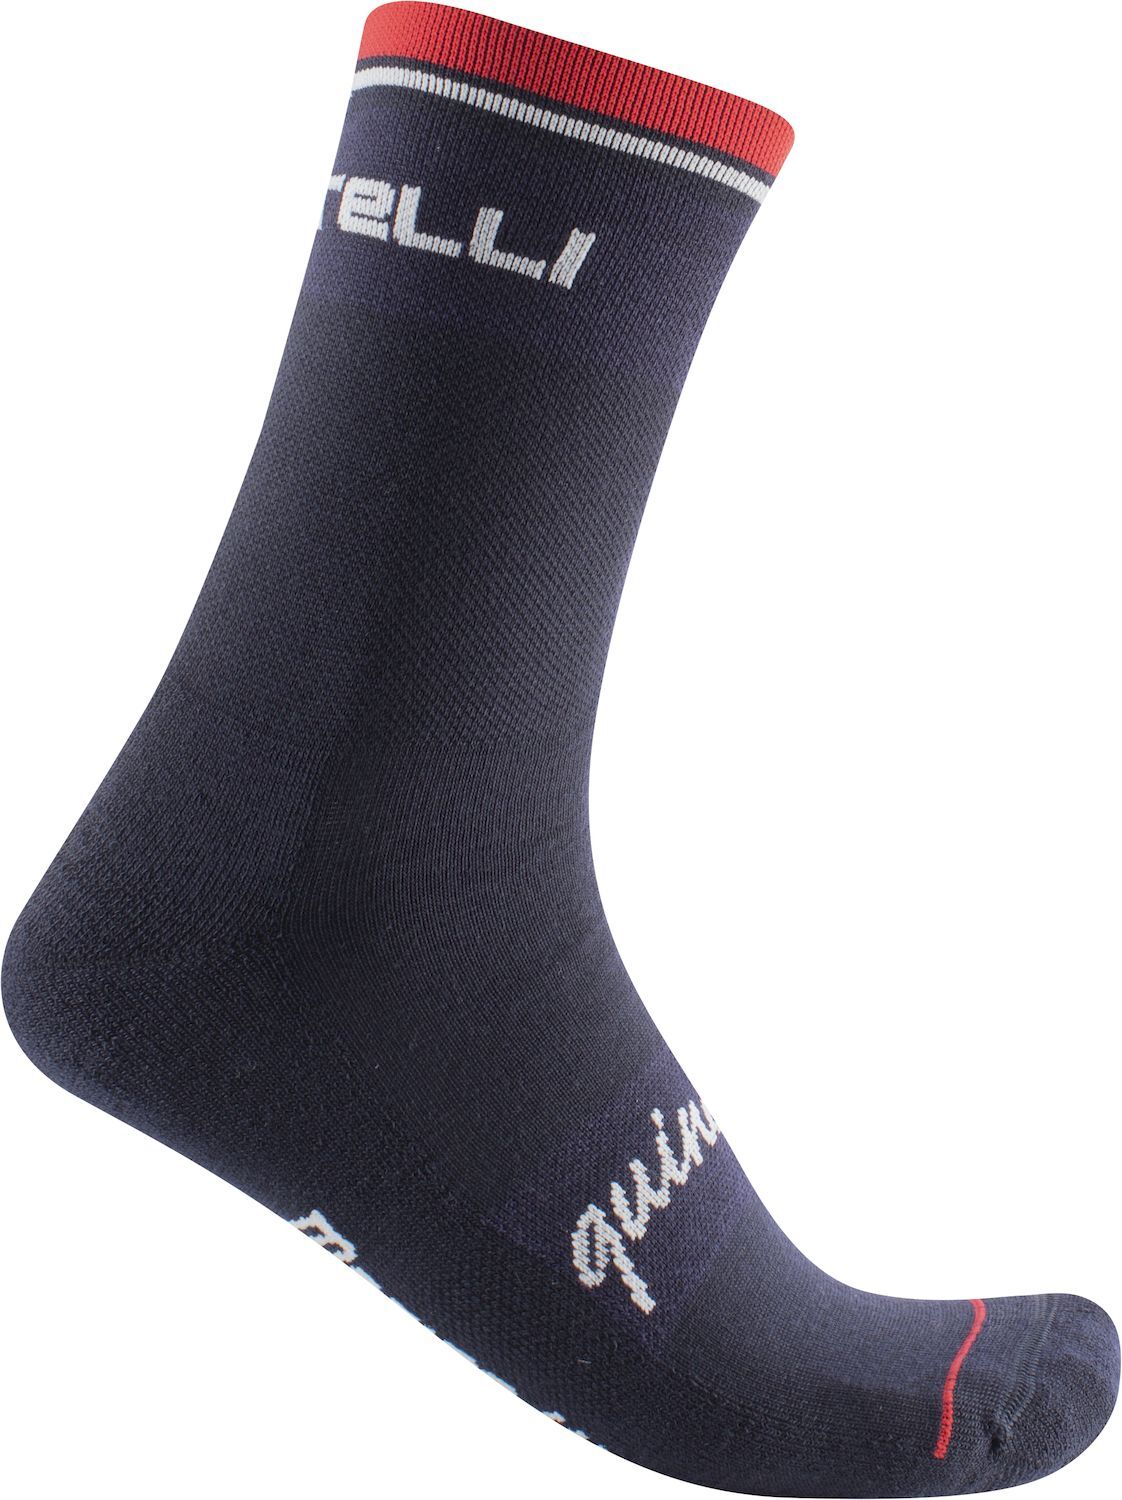 Castelli Quindici Soft Merino - Cycling socks